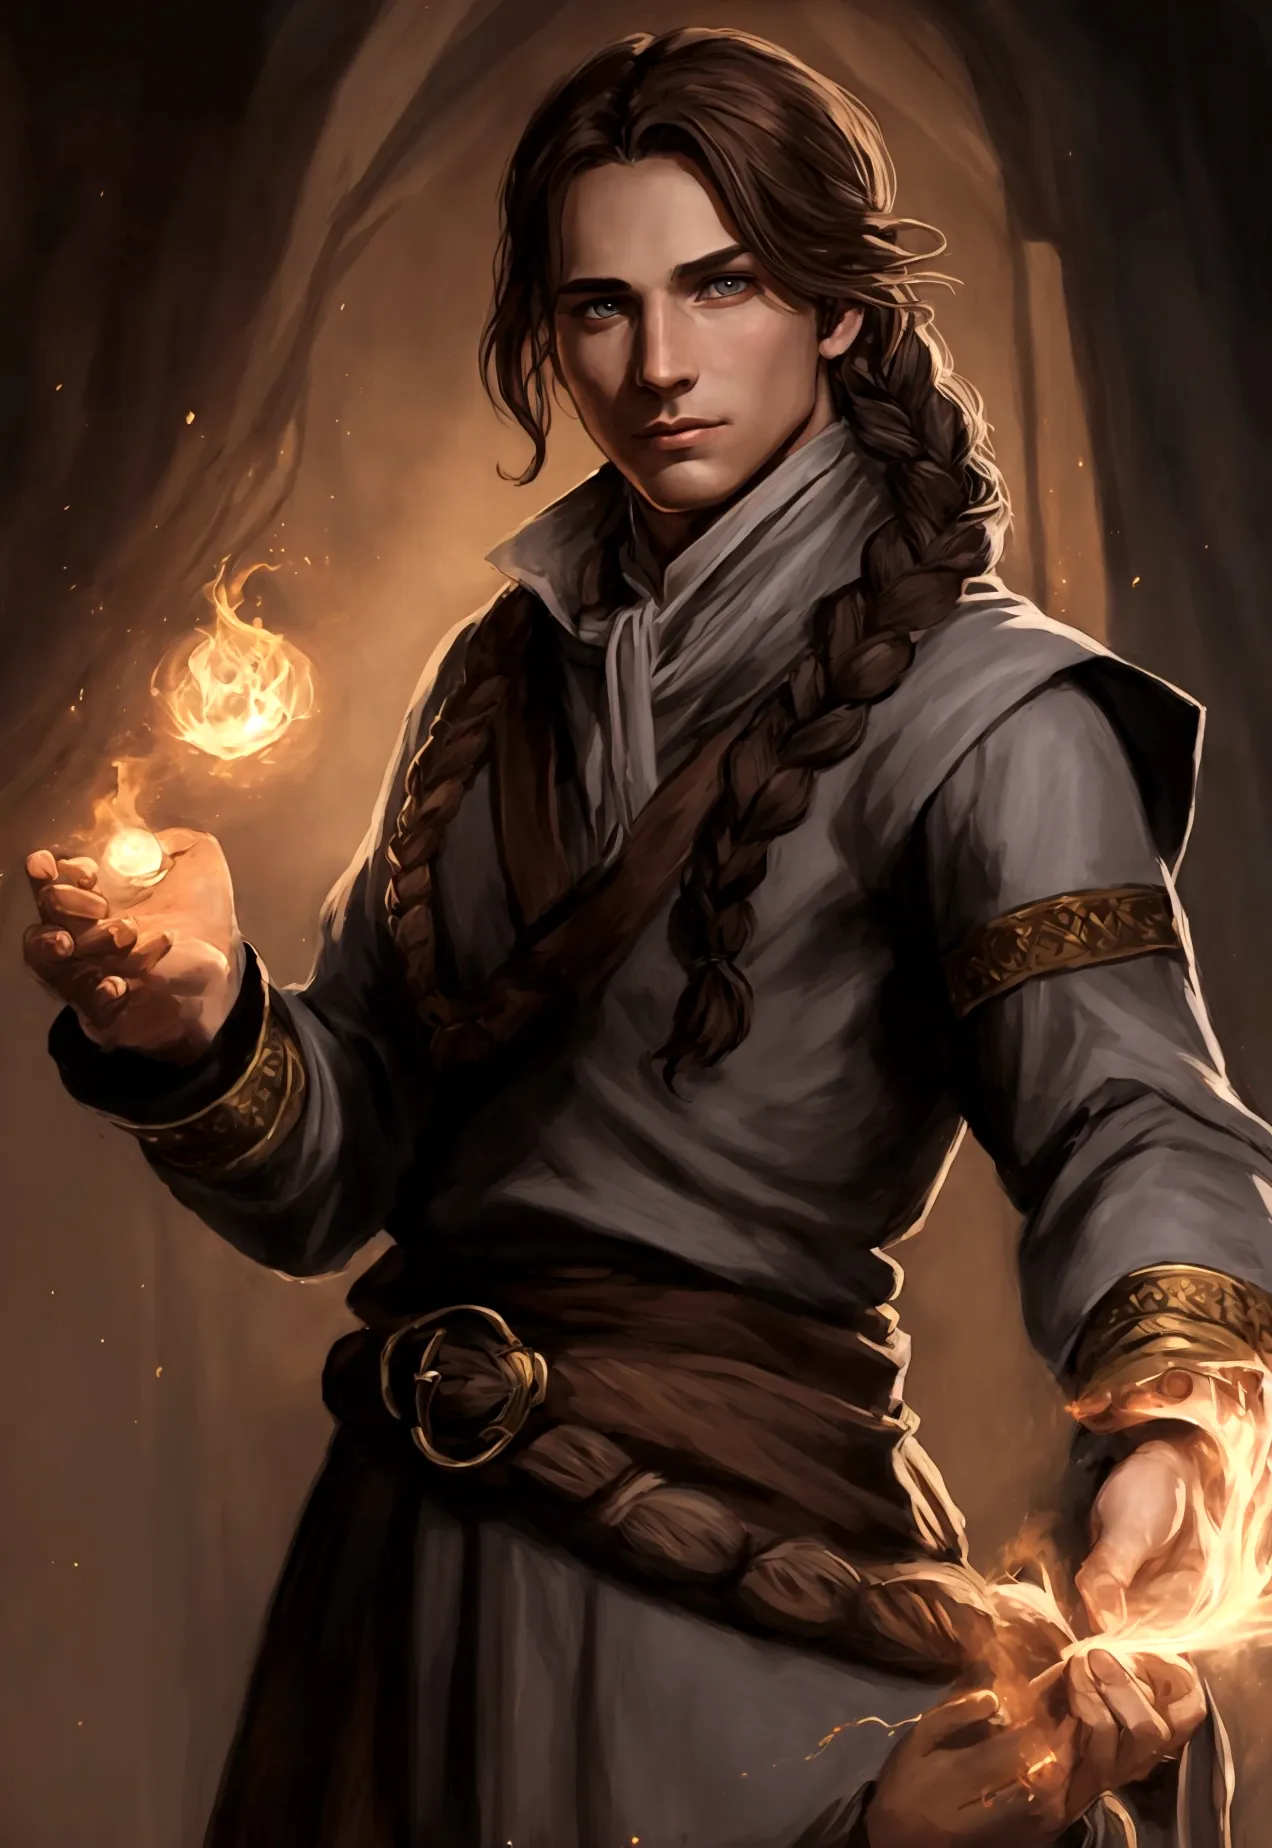 portrait art, young sorcerer, half a turn, brown hair with one waist-length braid, no beard, grey eyes, medieval era fantasy